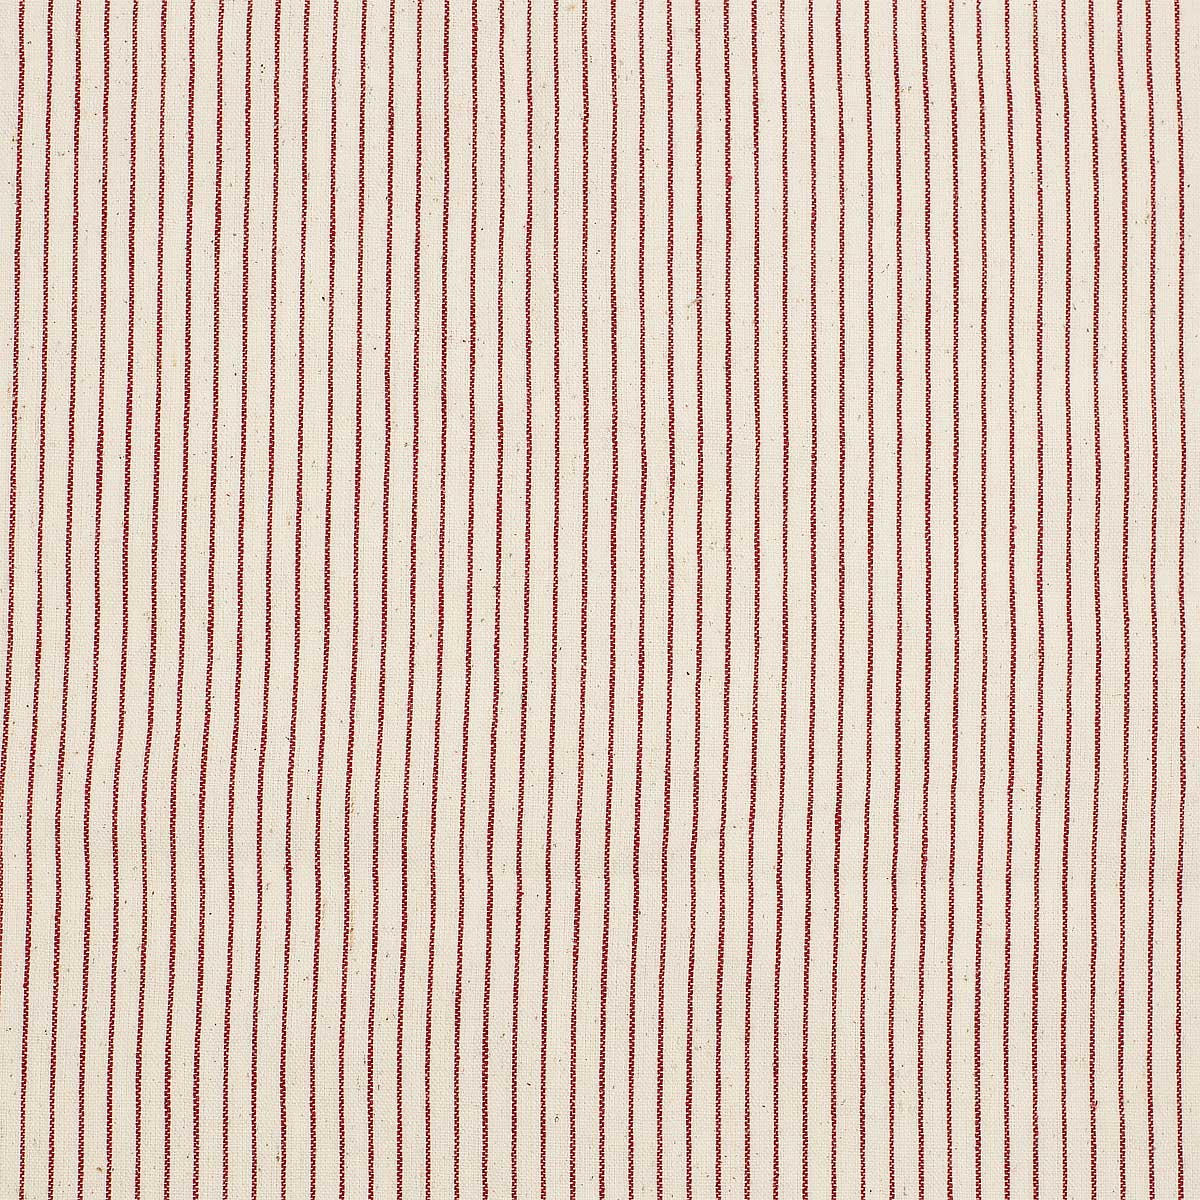 ECO BEA Fabric, white/red